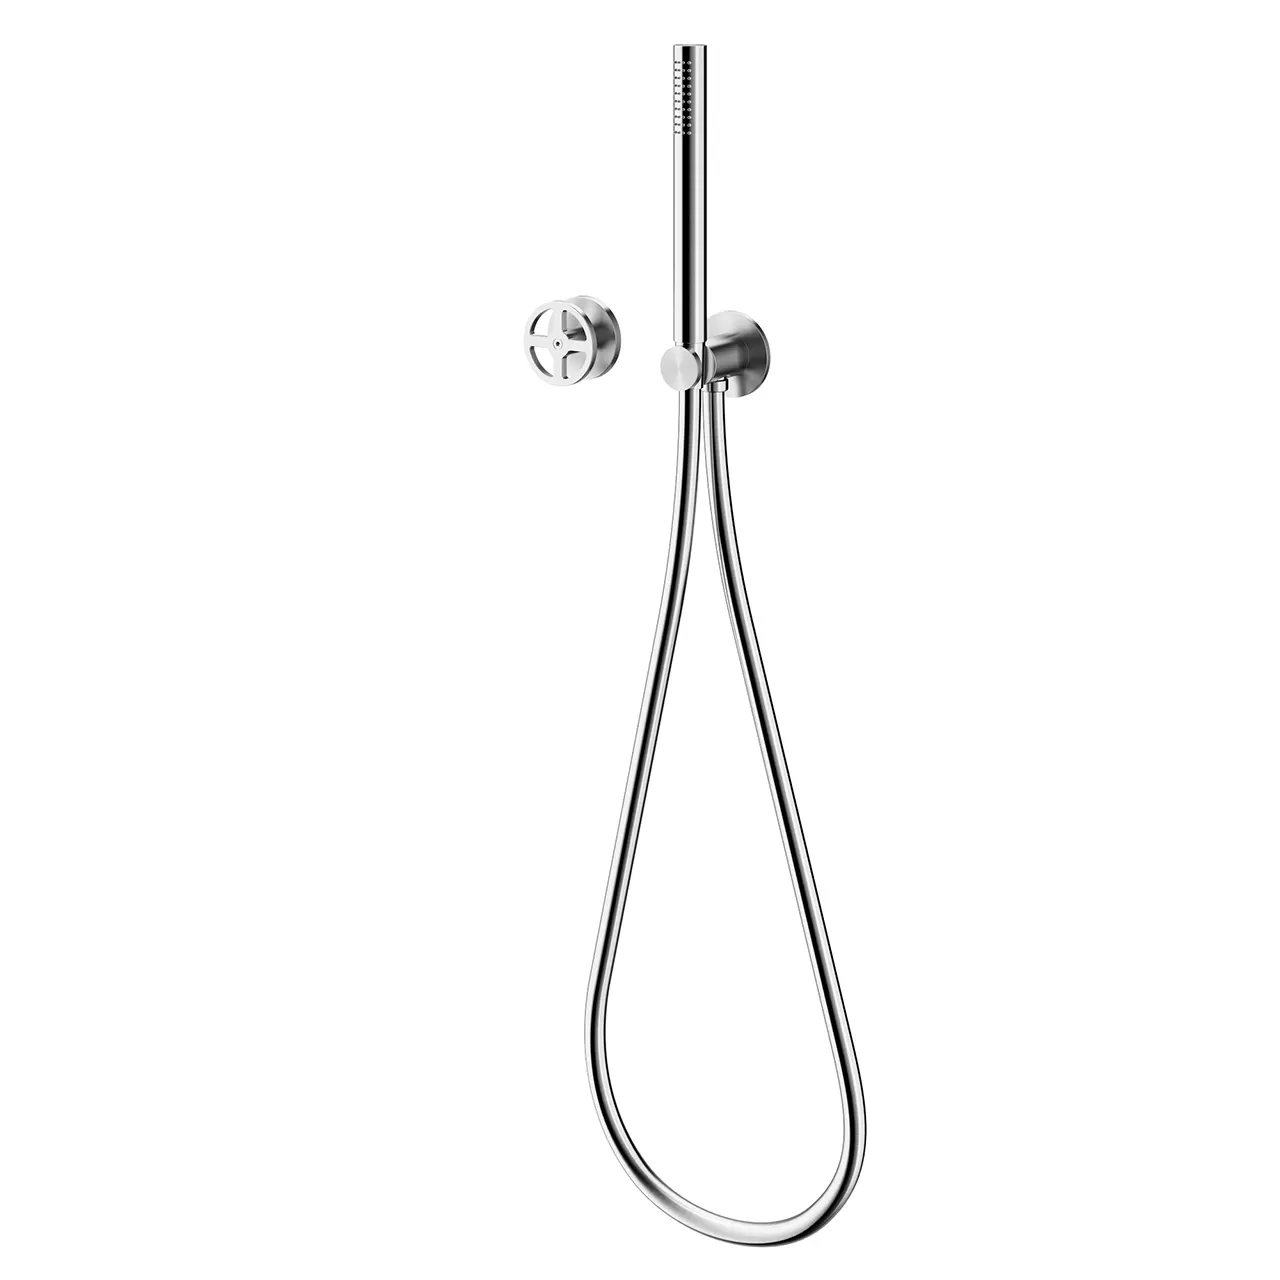 Bathroom – valvola02-mixer-shower-set-20-58-by-quadrodesign